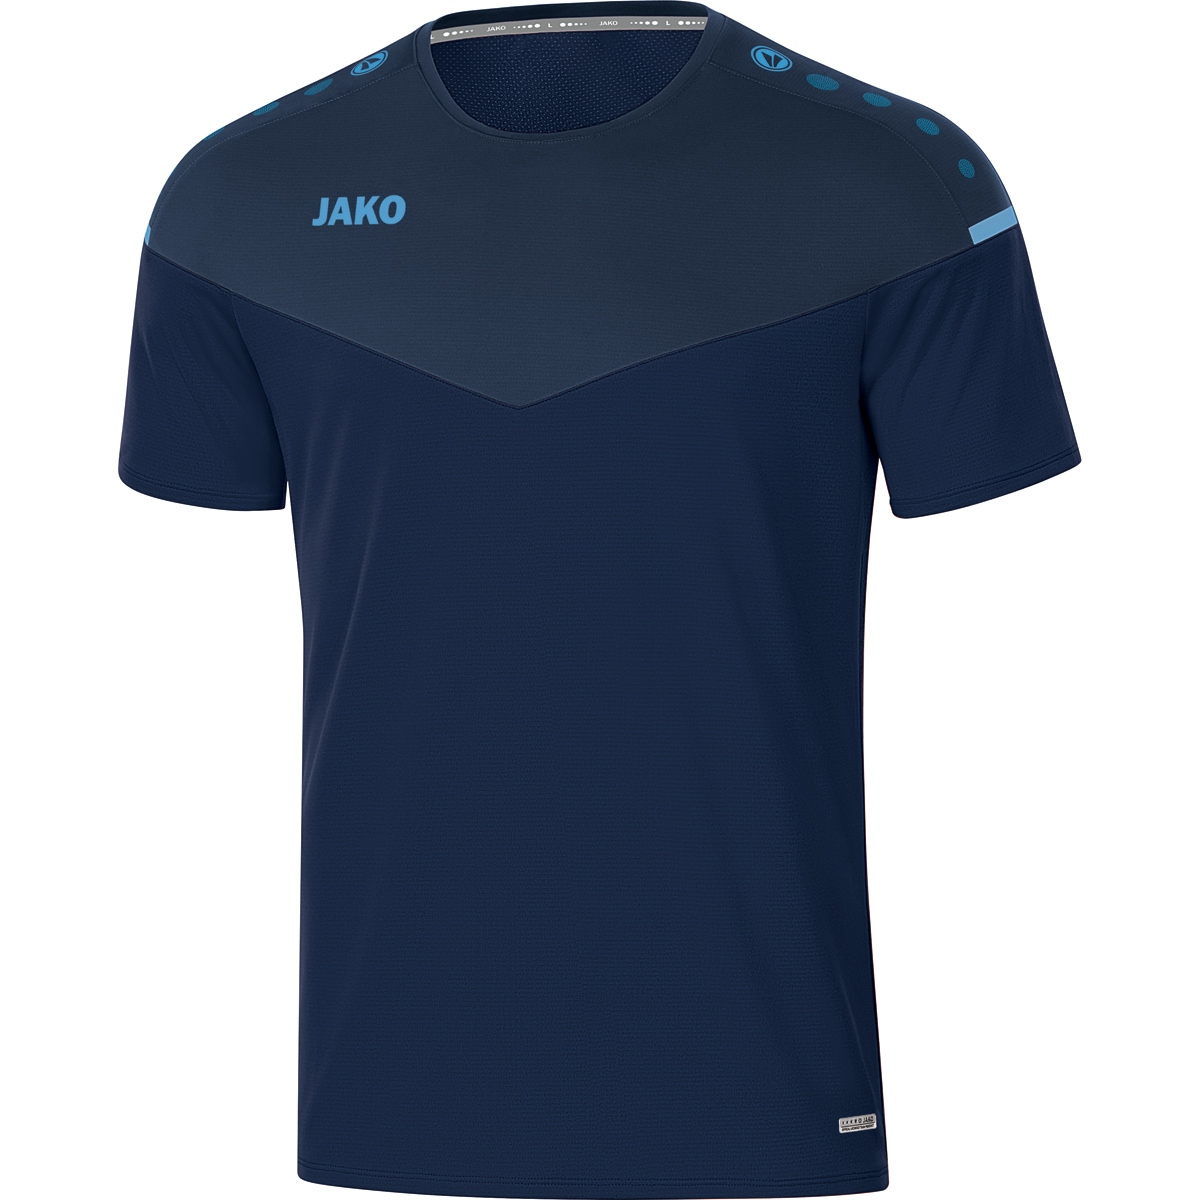 JAKO T-Shirt Champ 2.0 marine/darkblue/skyblue, 6120 L, Herren, Gr